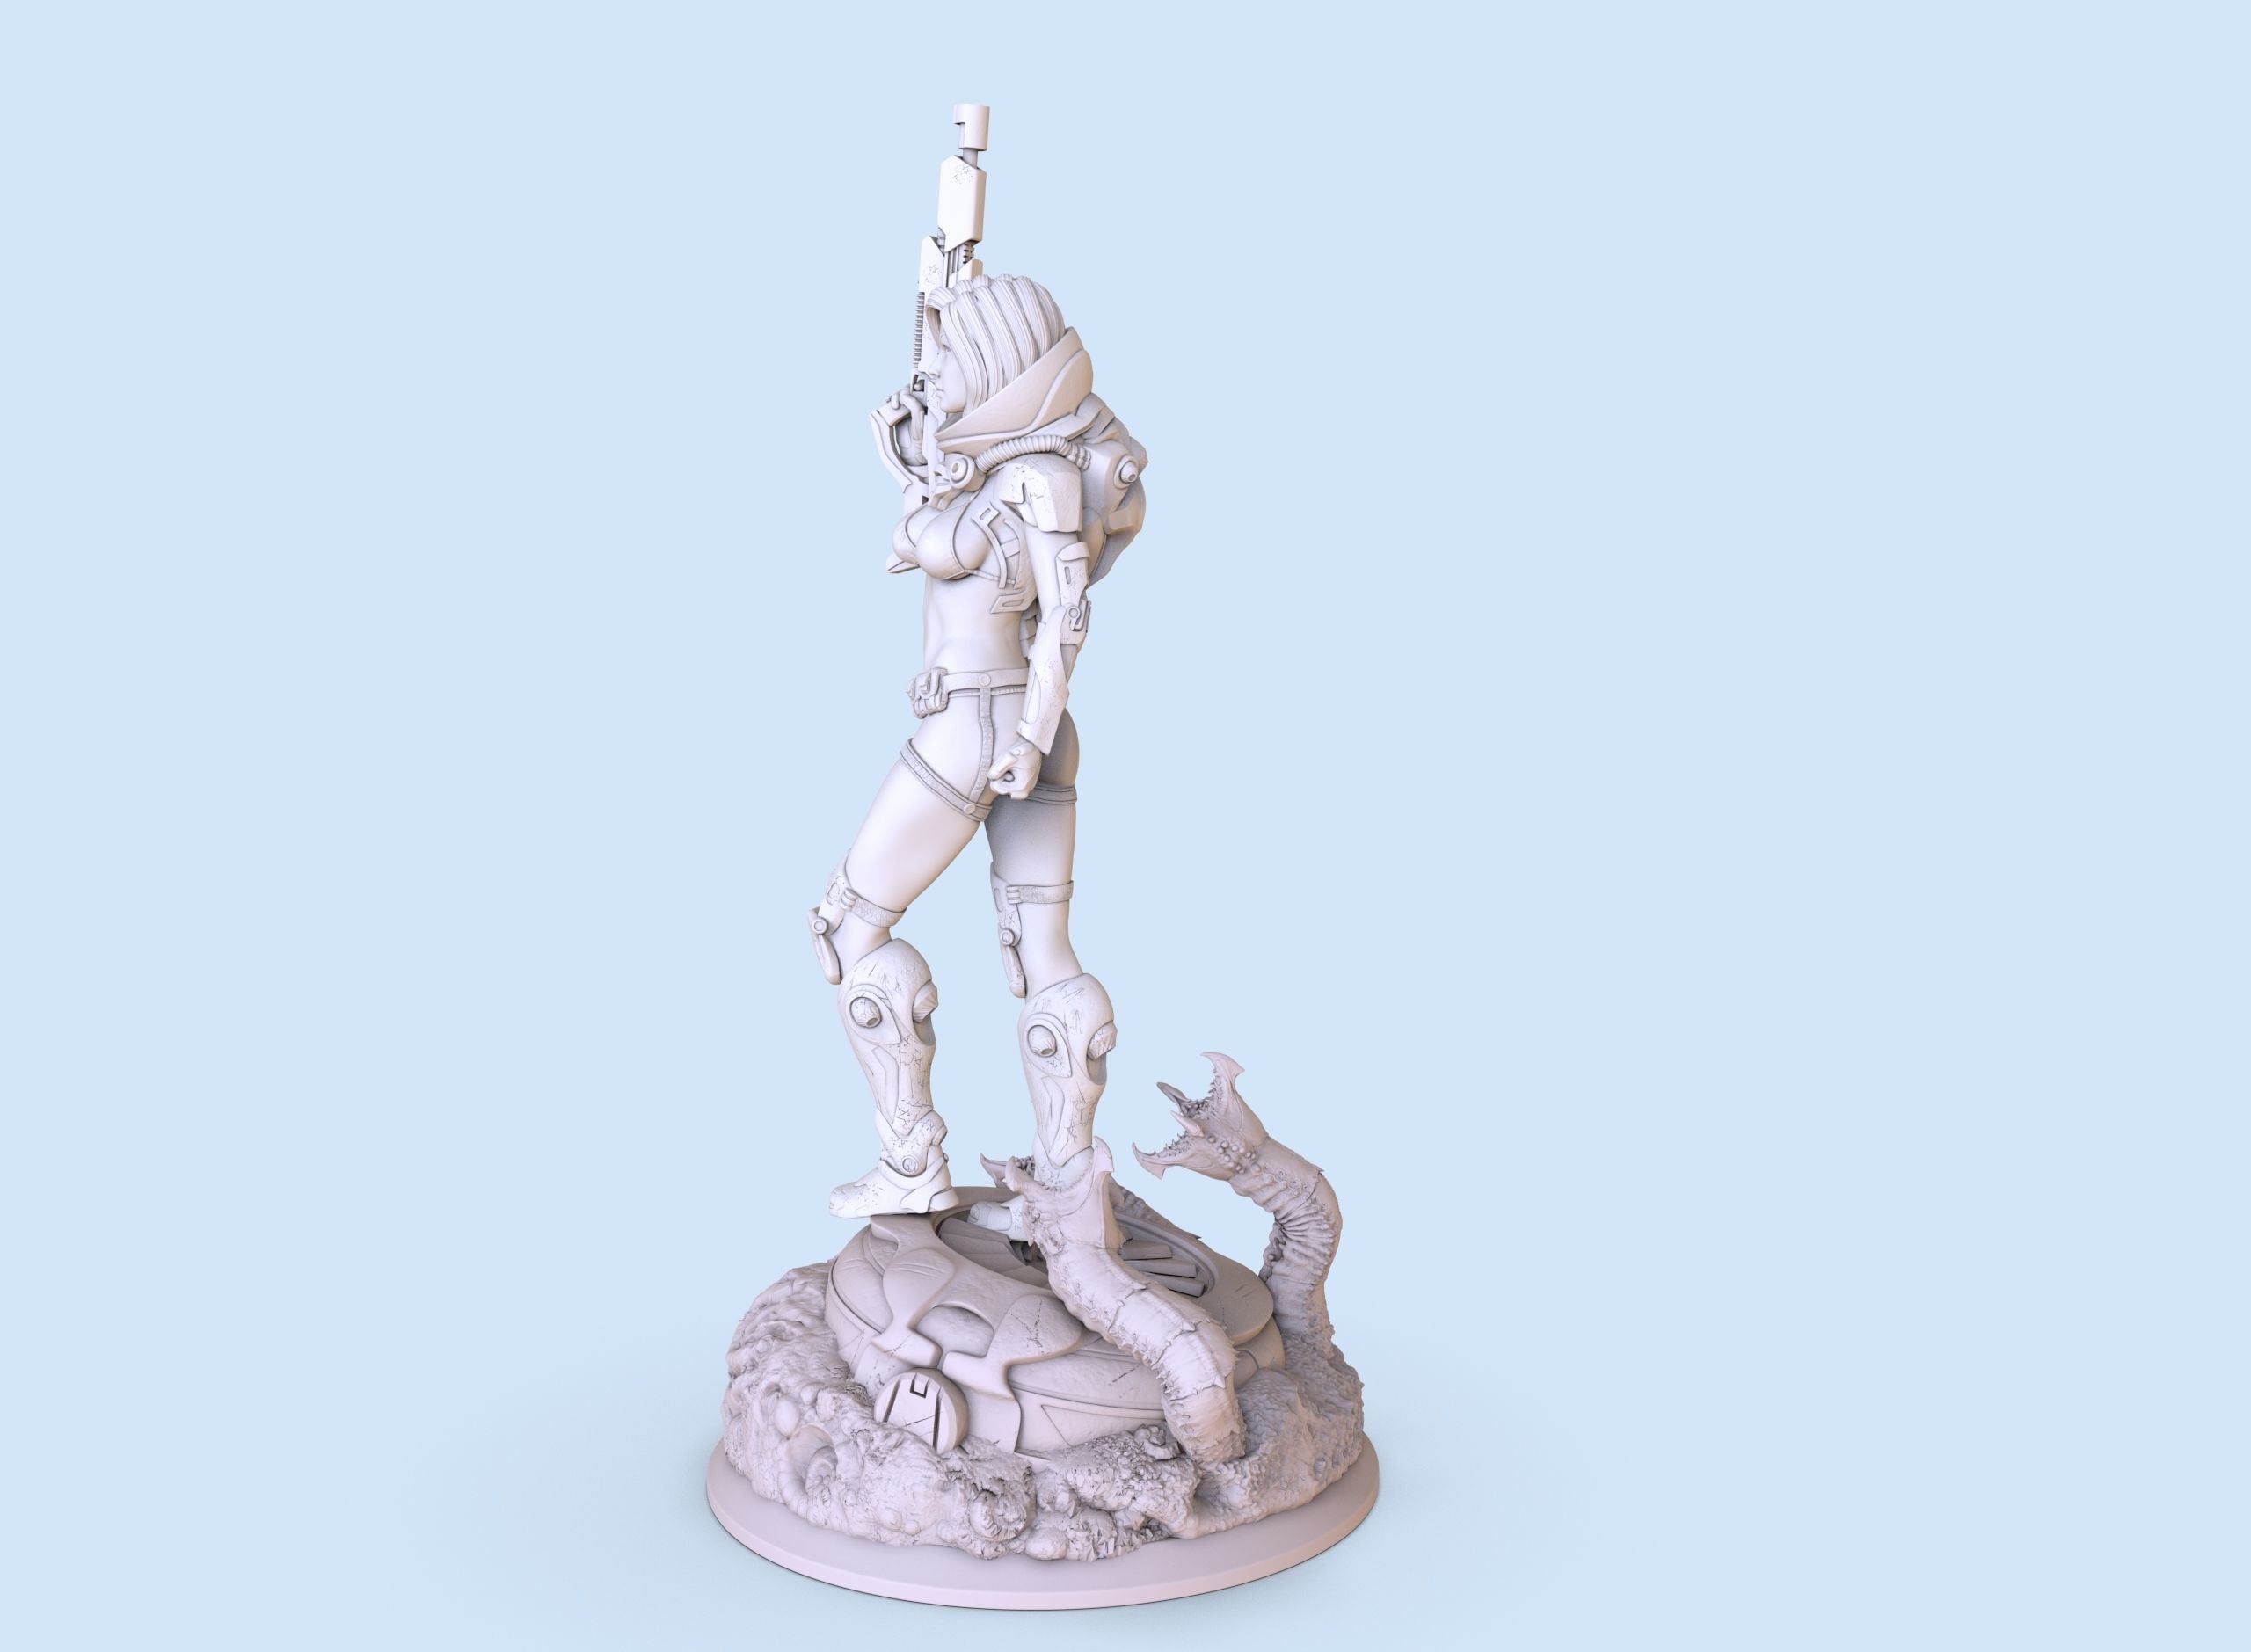 Space Warrior - 3D Print - Fan Art - 180mm SFW/NSFW